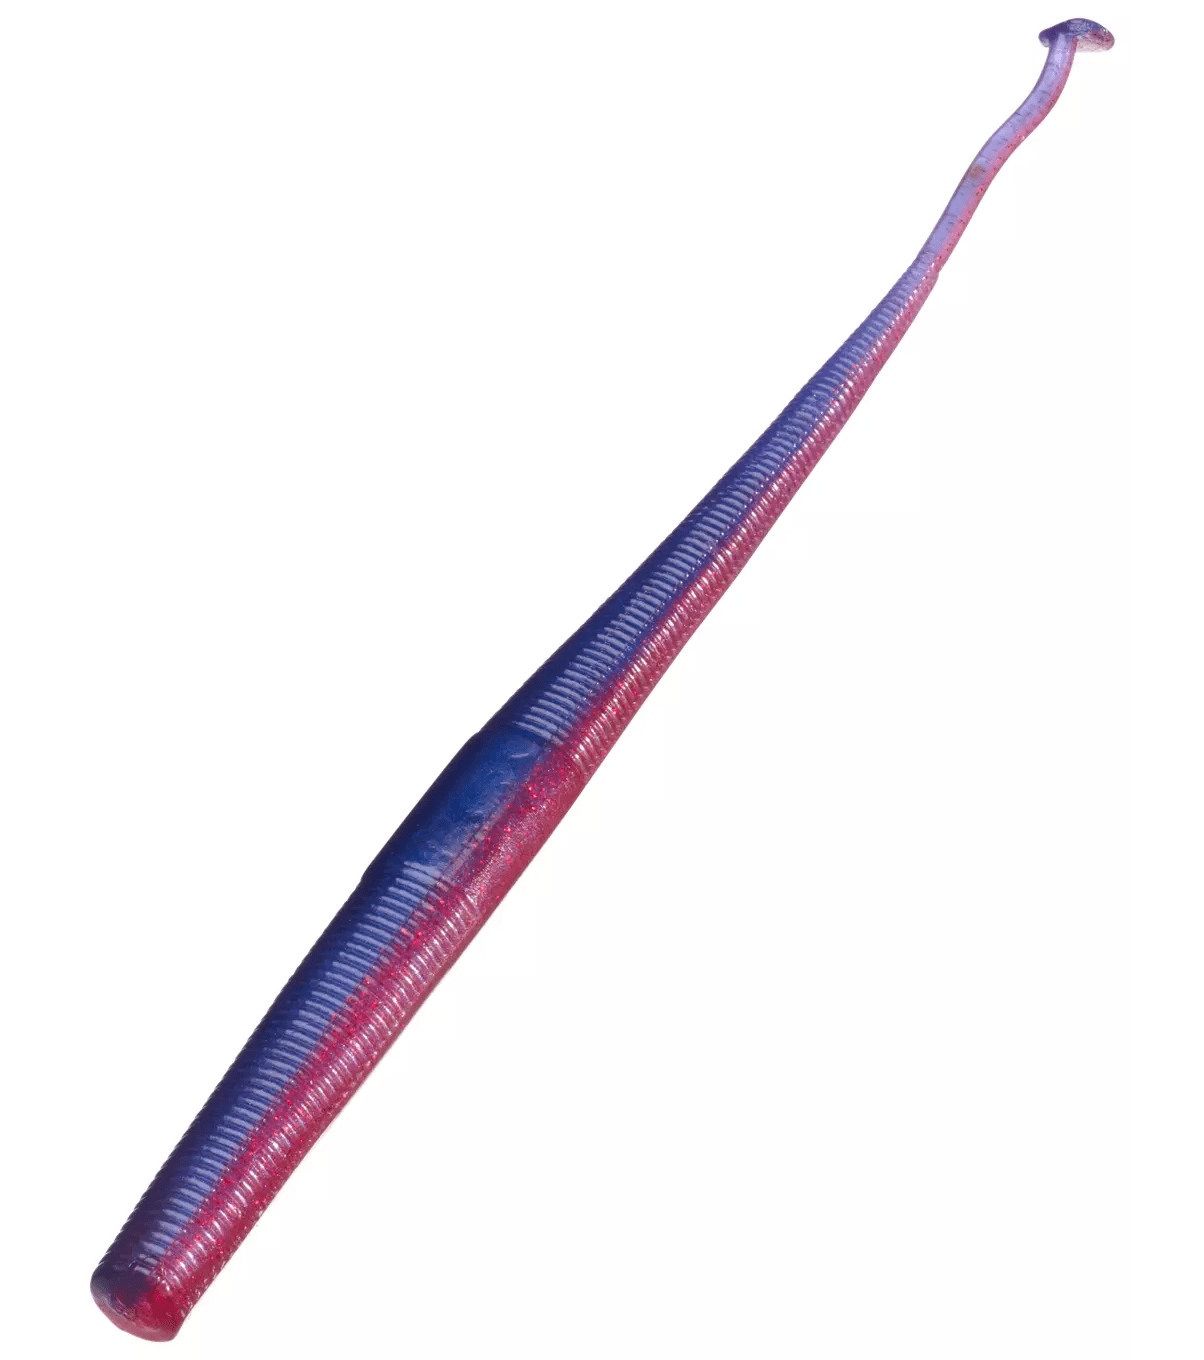 Gene Larew Tattletail Worm